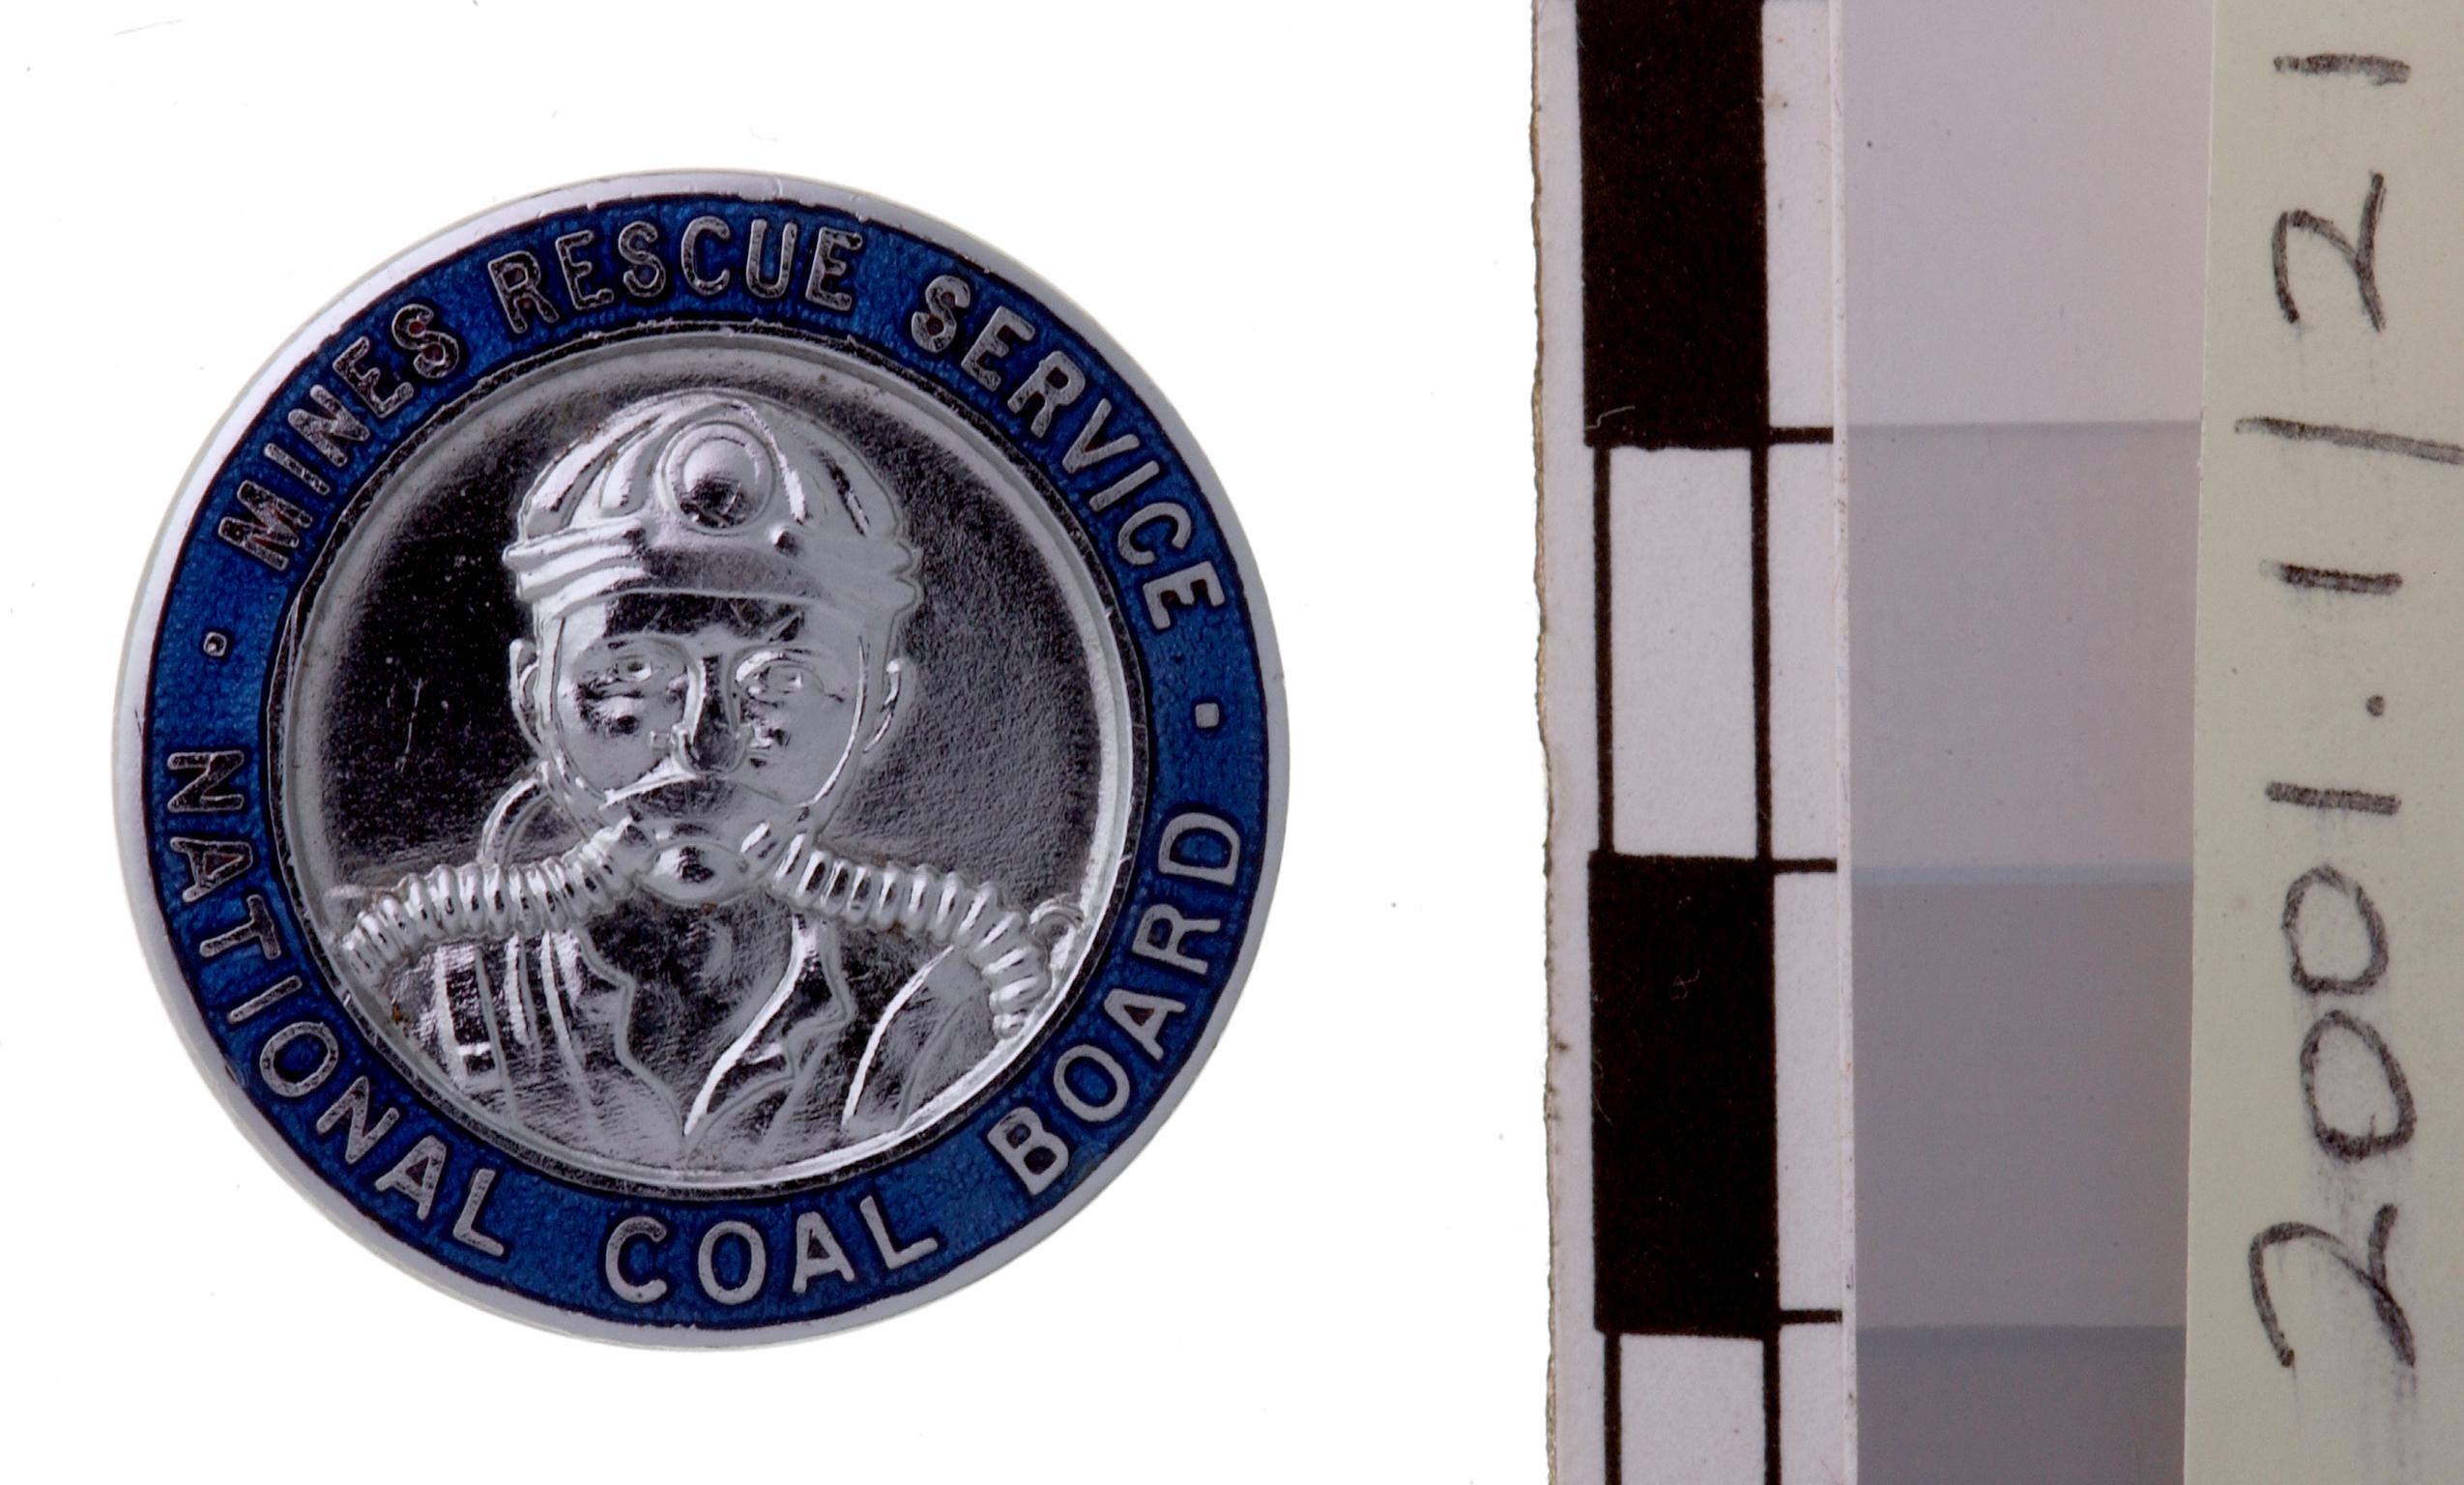 Mines Rescue Service, badge